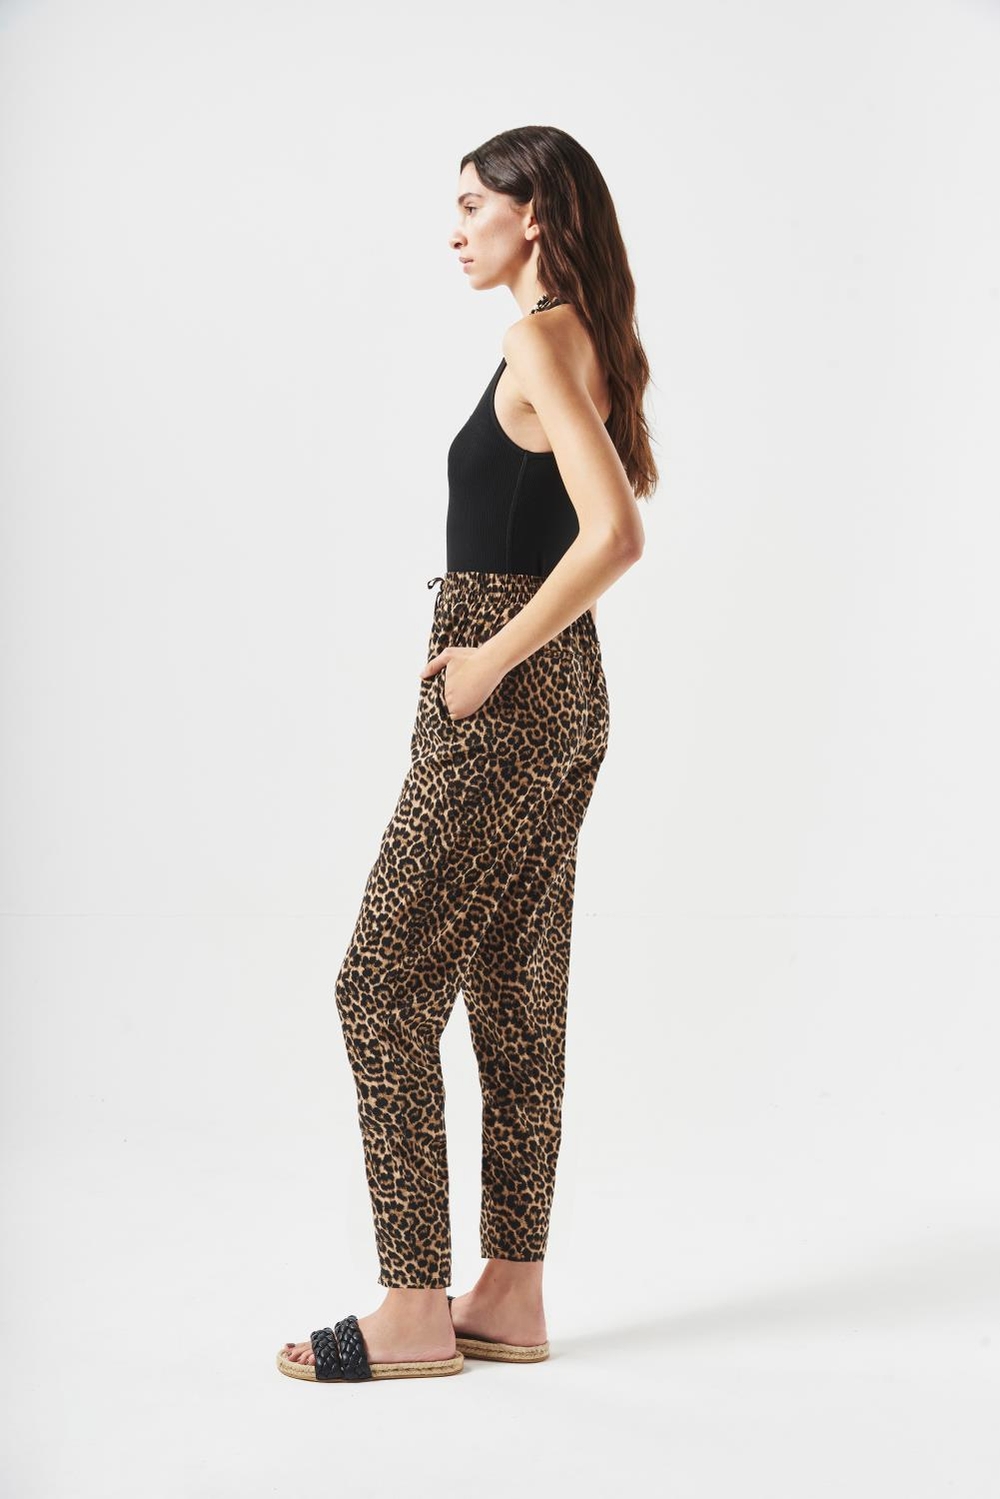 pantalon porter leopard